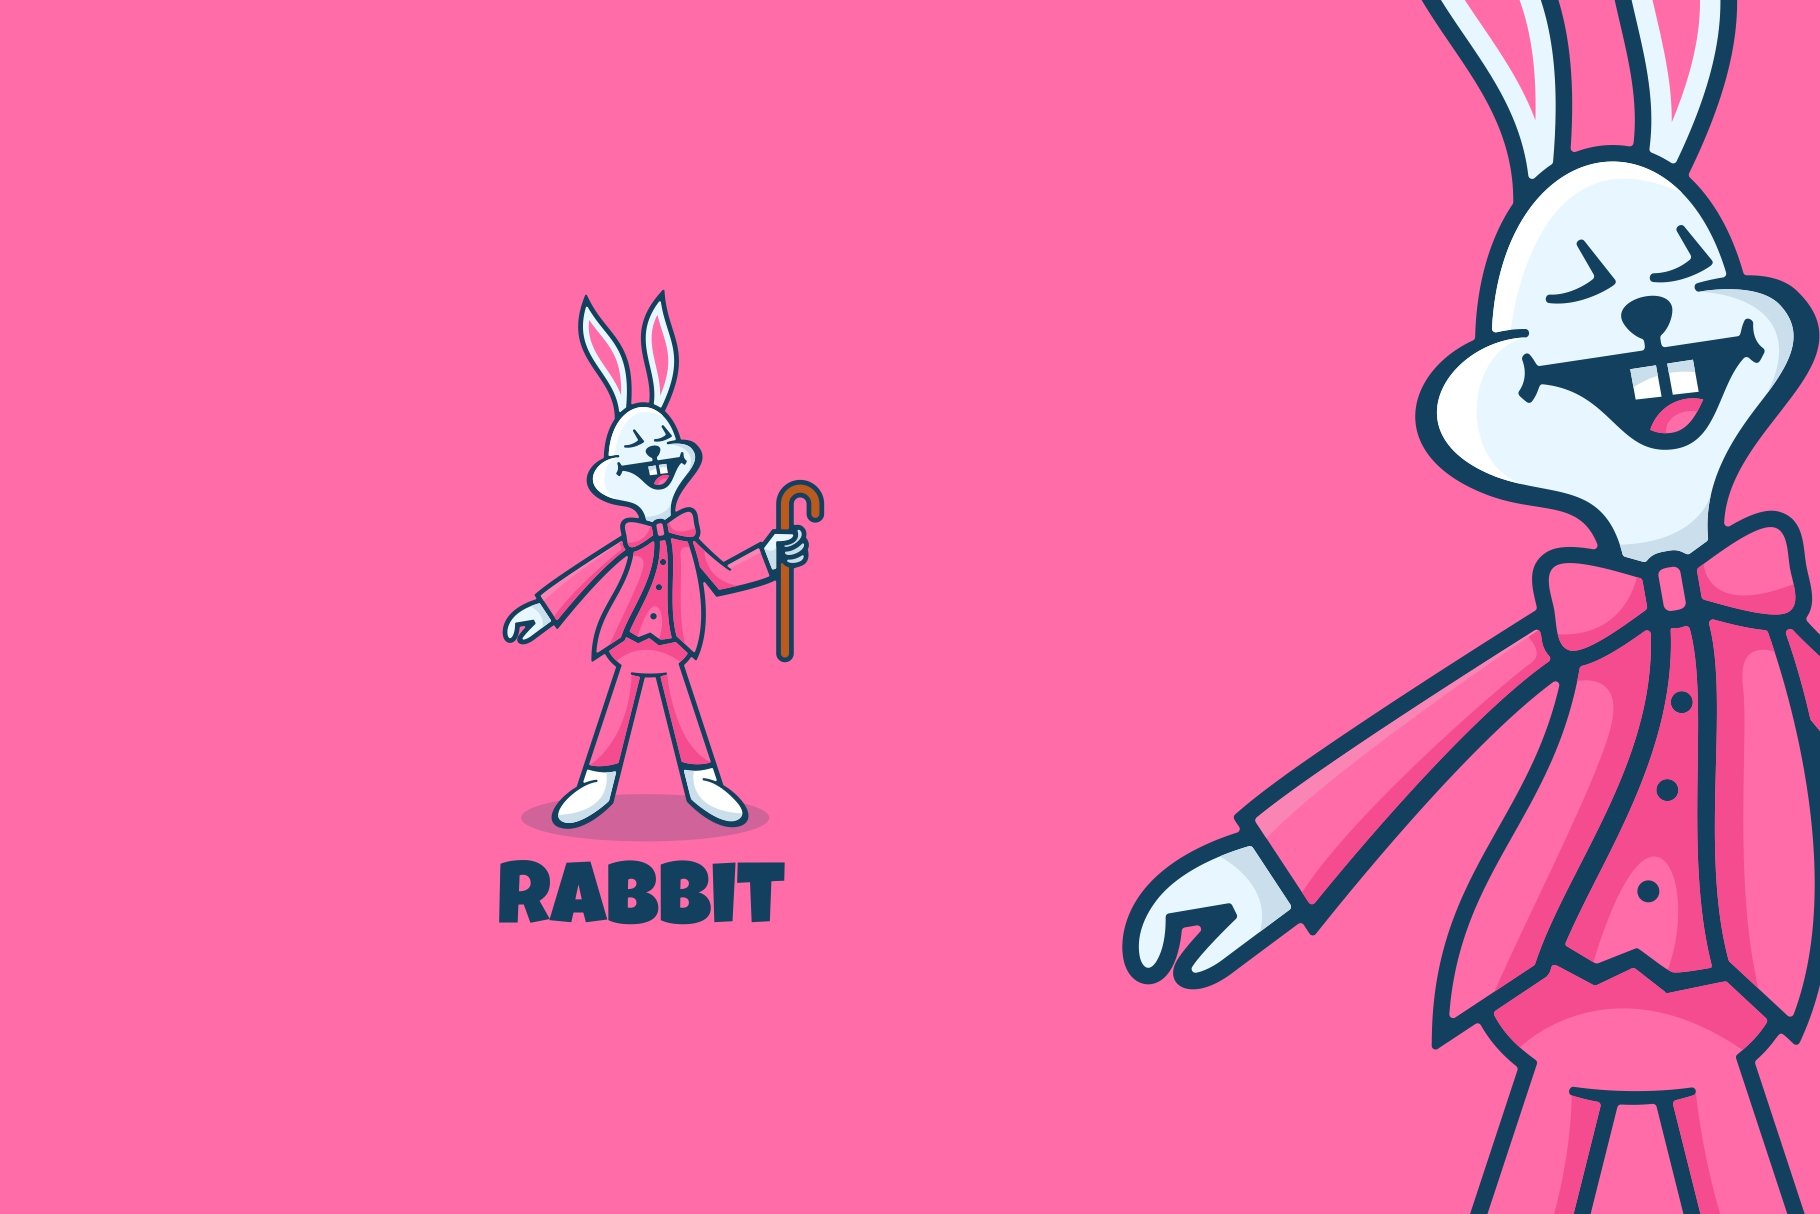 Rabbit Cartoon Character Logo cover image.